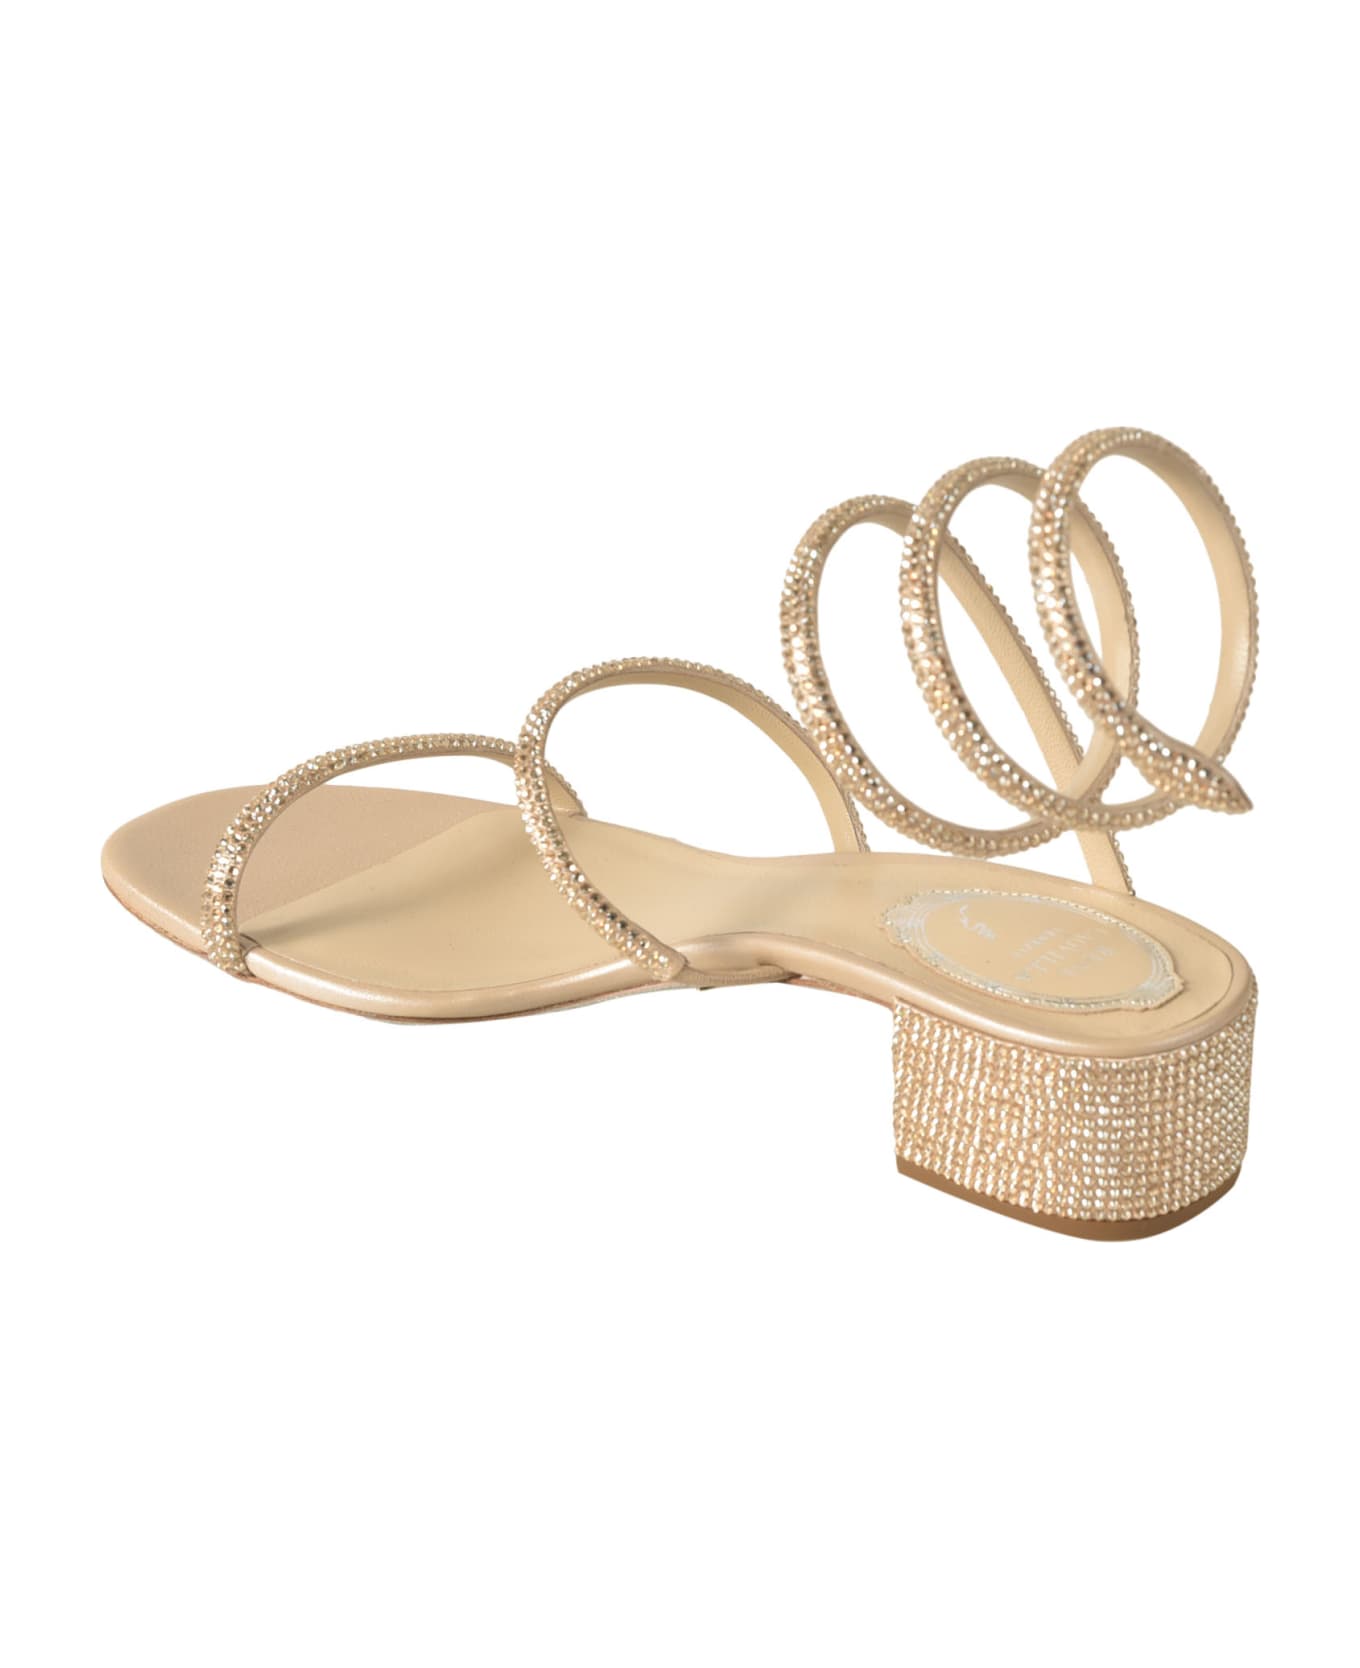 René Caovilla Crystal Embellished Twisted Strap Flat Sandals - Beige サンダル